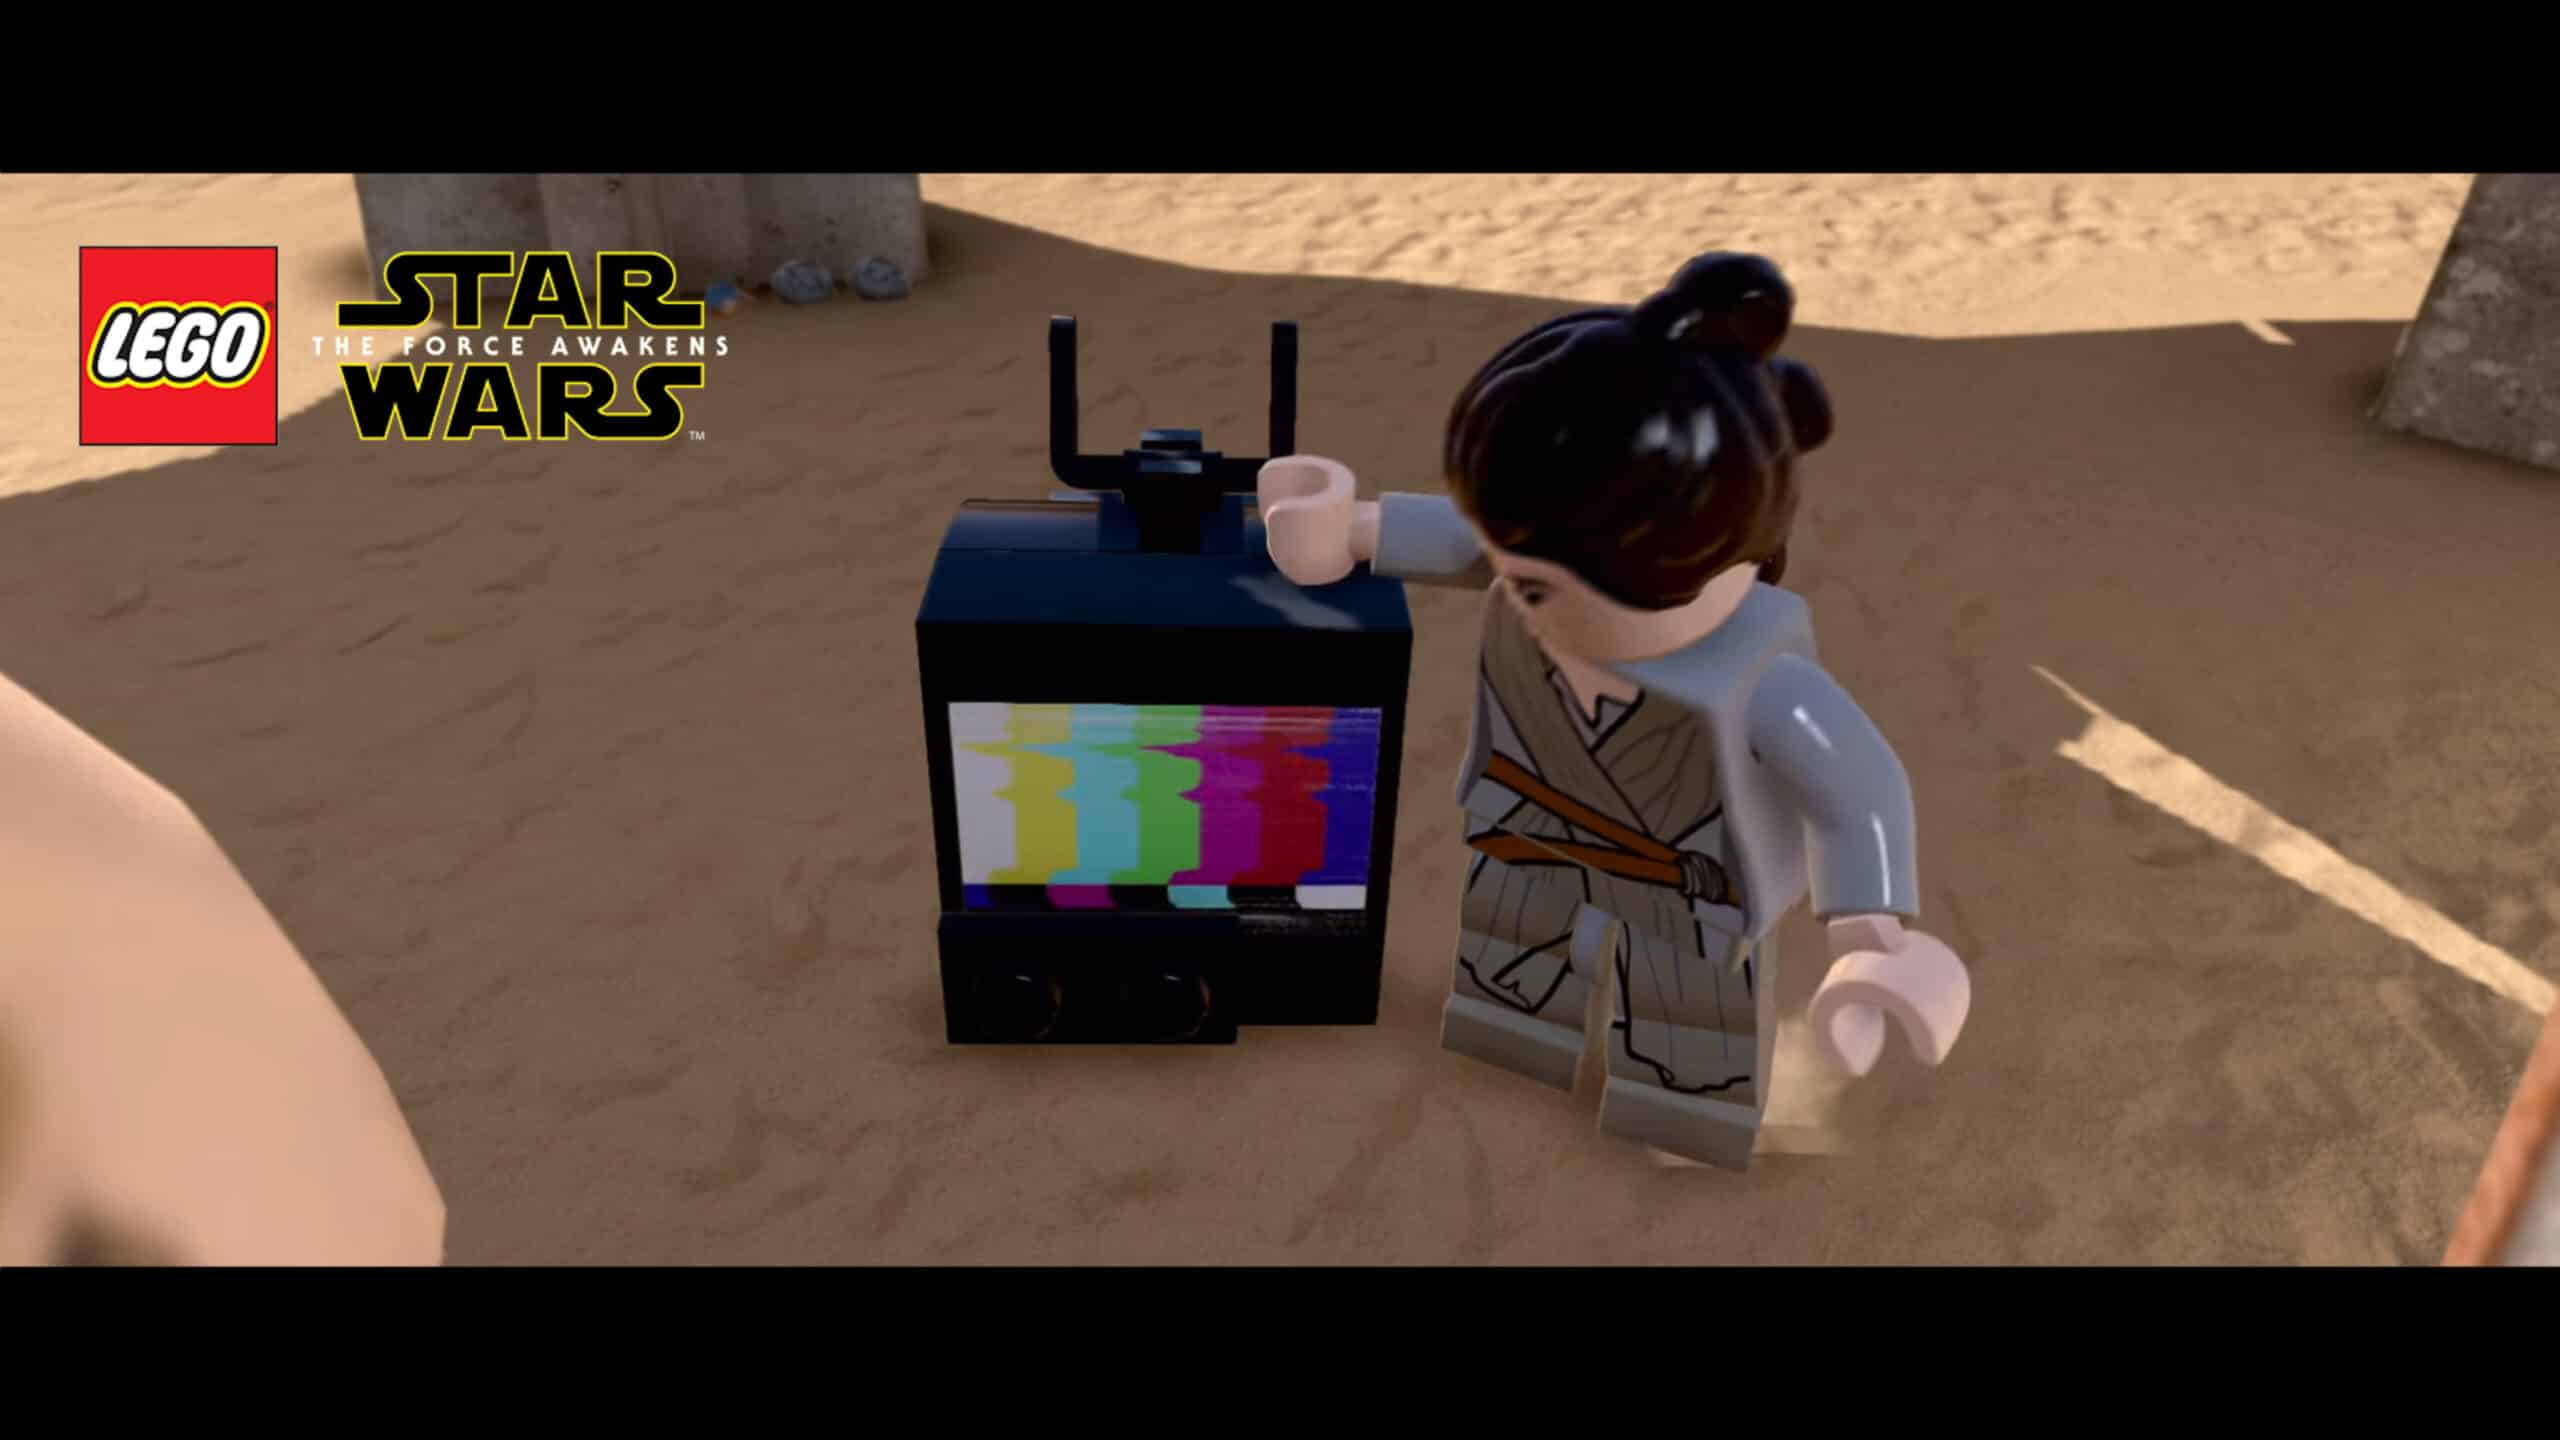 Lego Star Wars: The Force Awakens Glitches